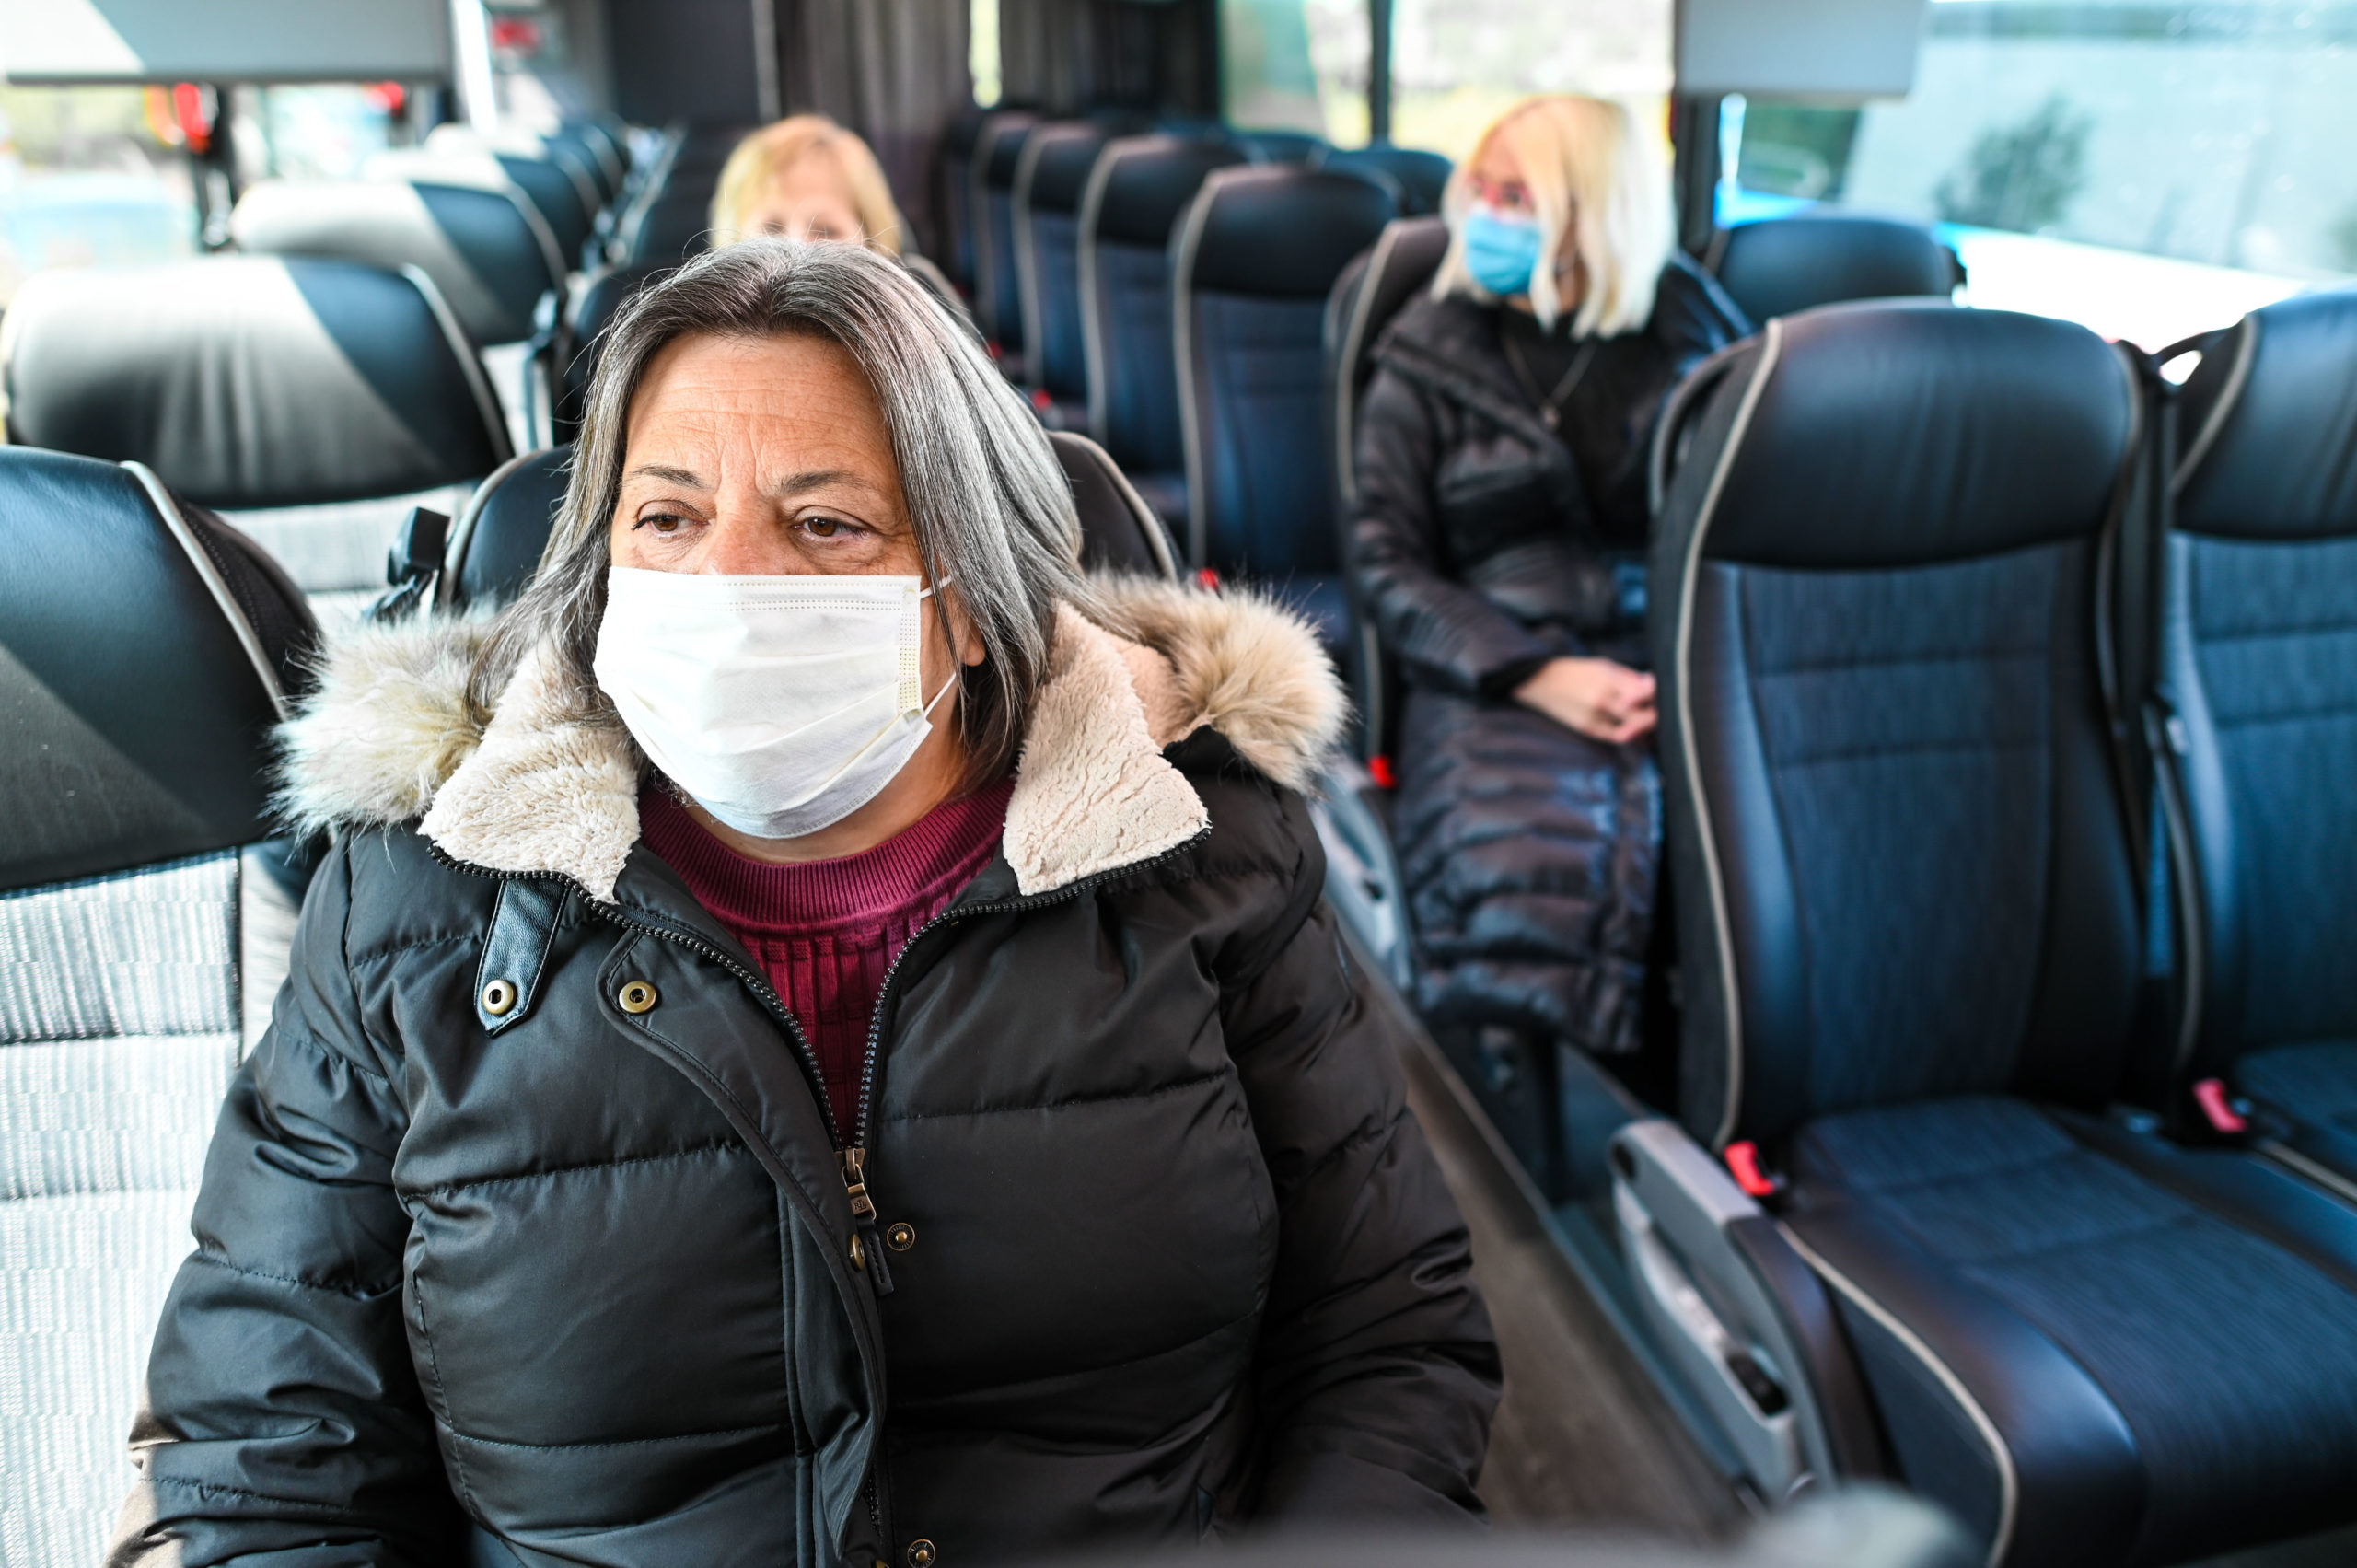 Passenger Wearing a Mask on Bus